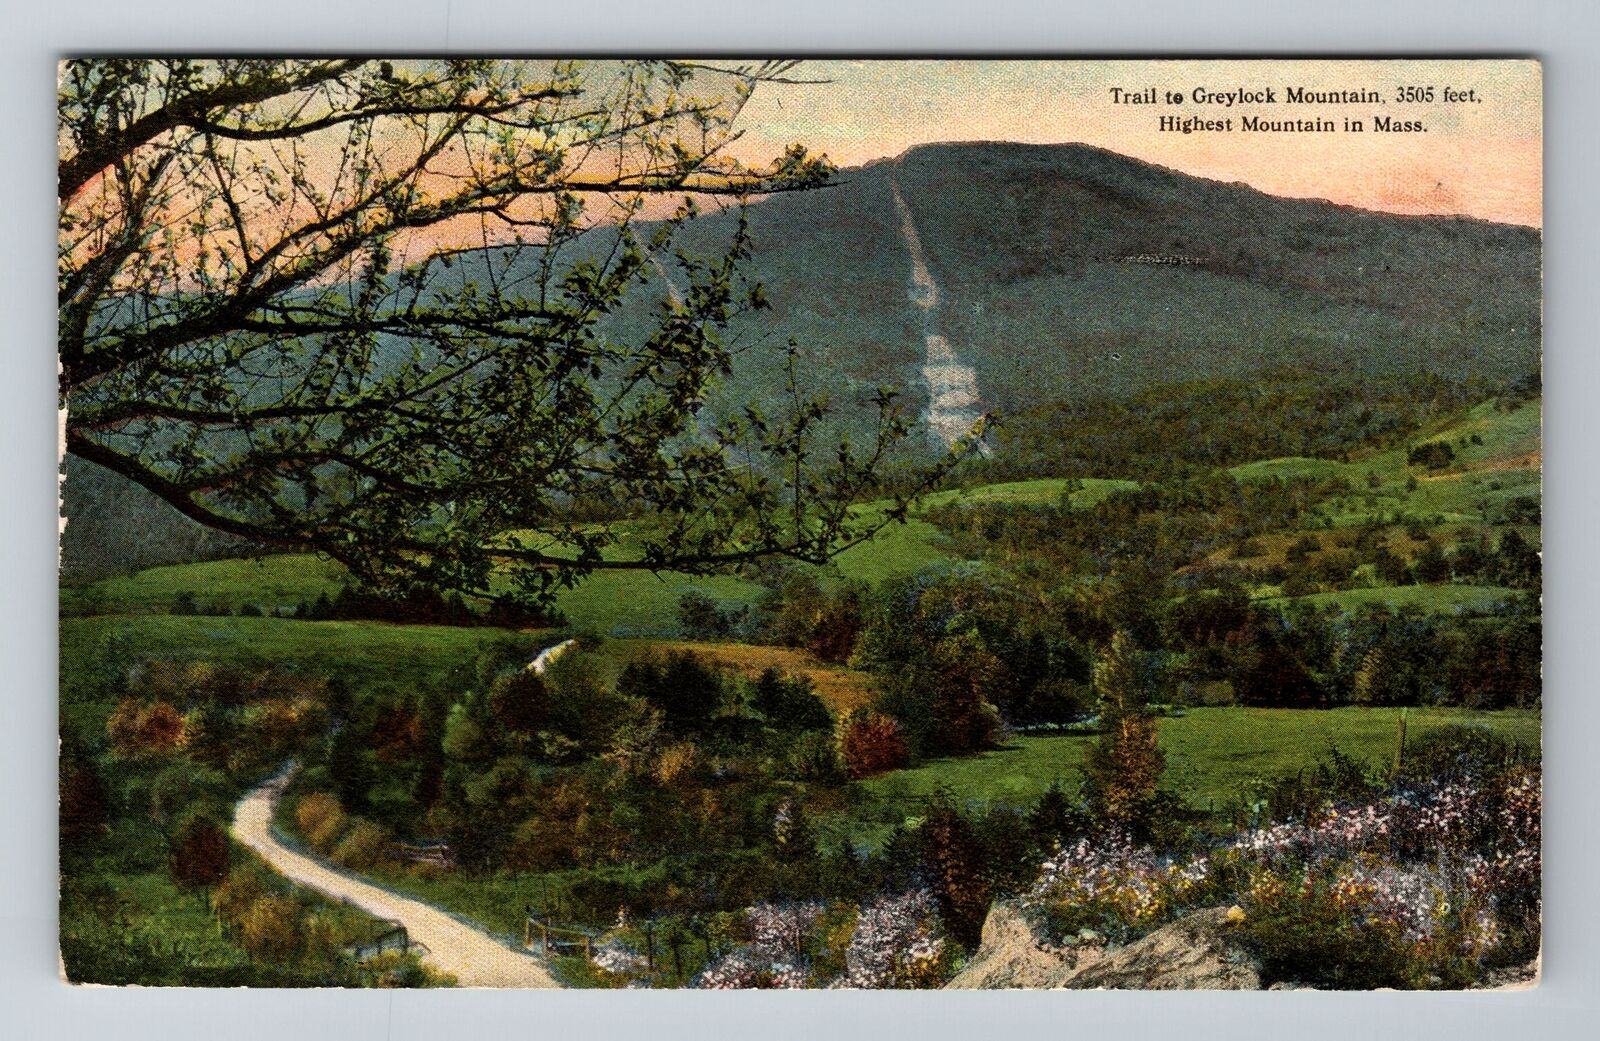 Greylock Mountain, MA-Massachusetts, Trail To Peak c1916, Vintage Postcard